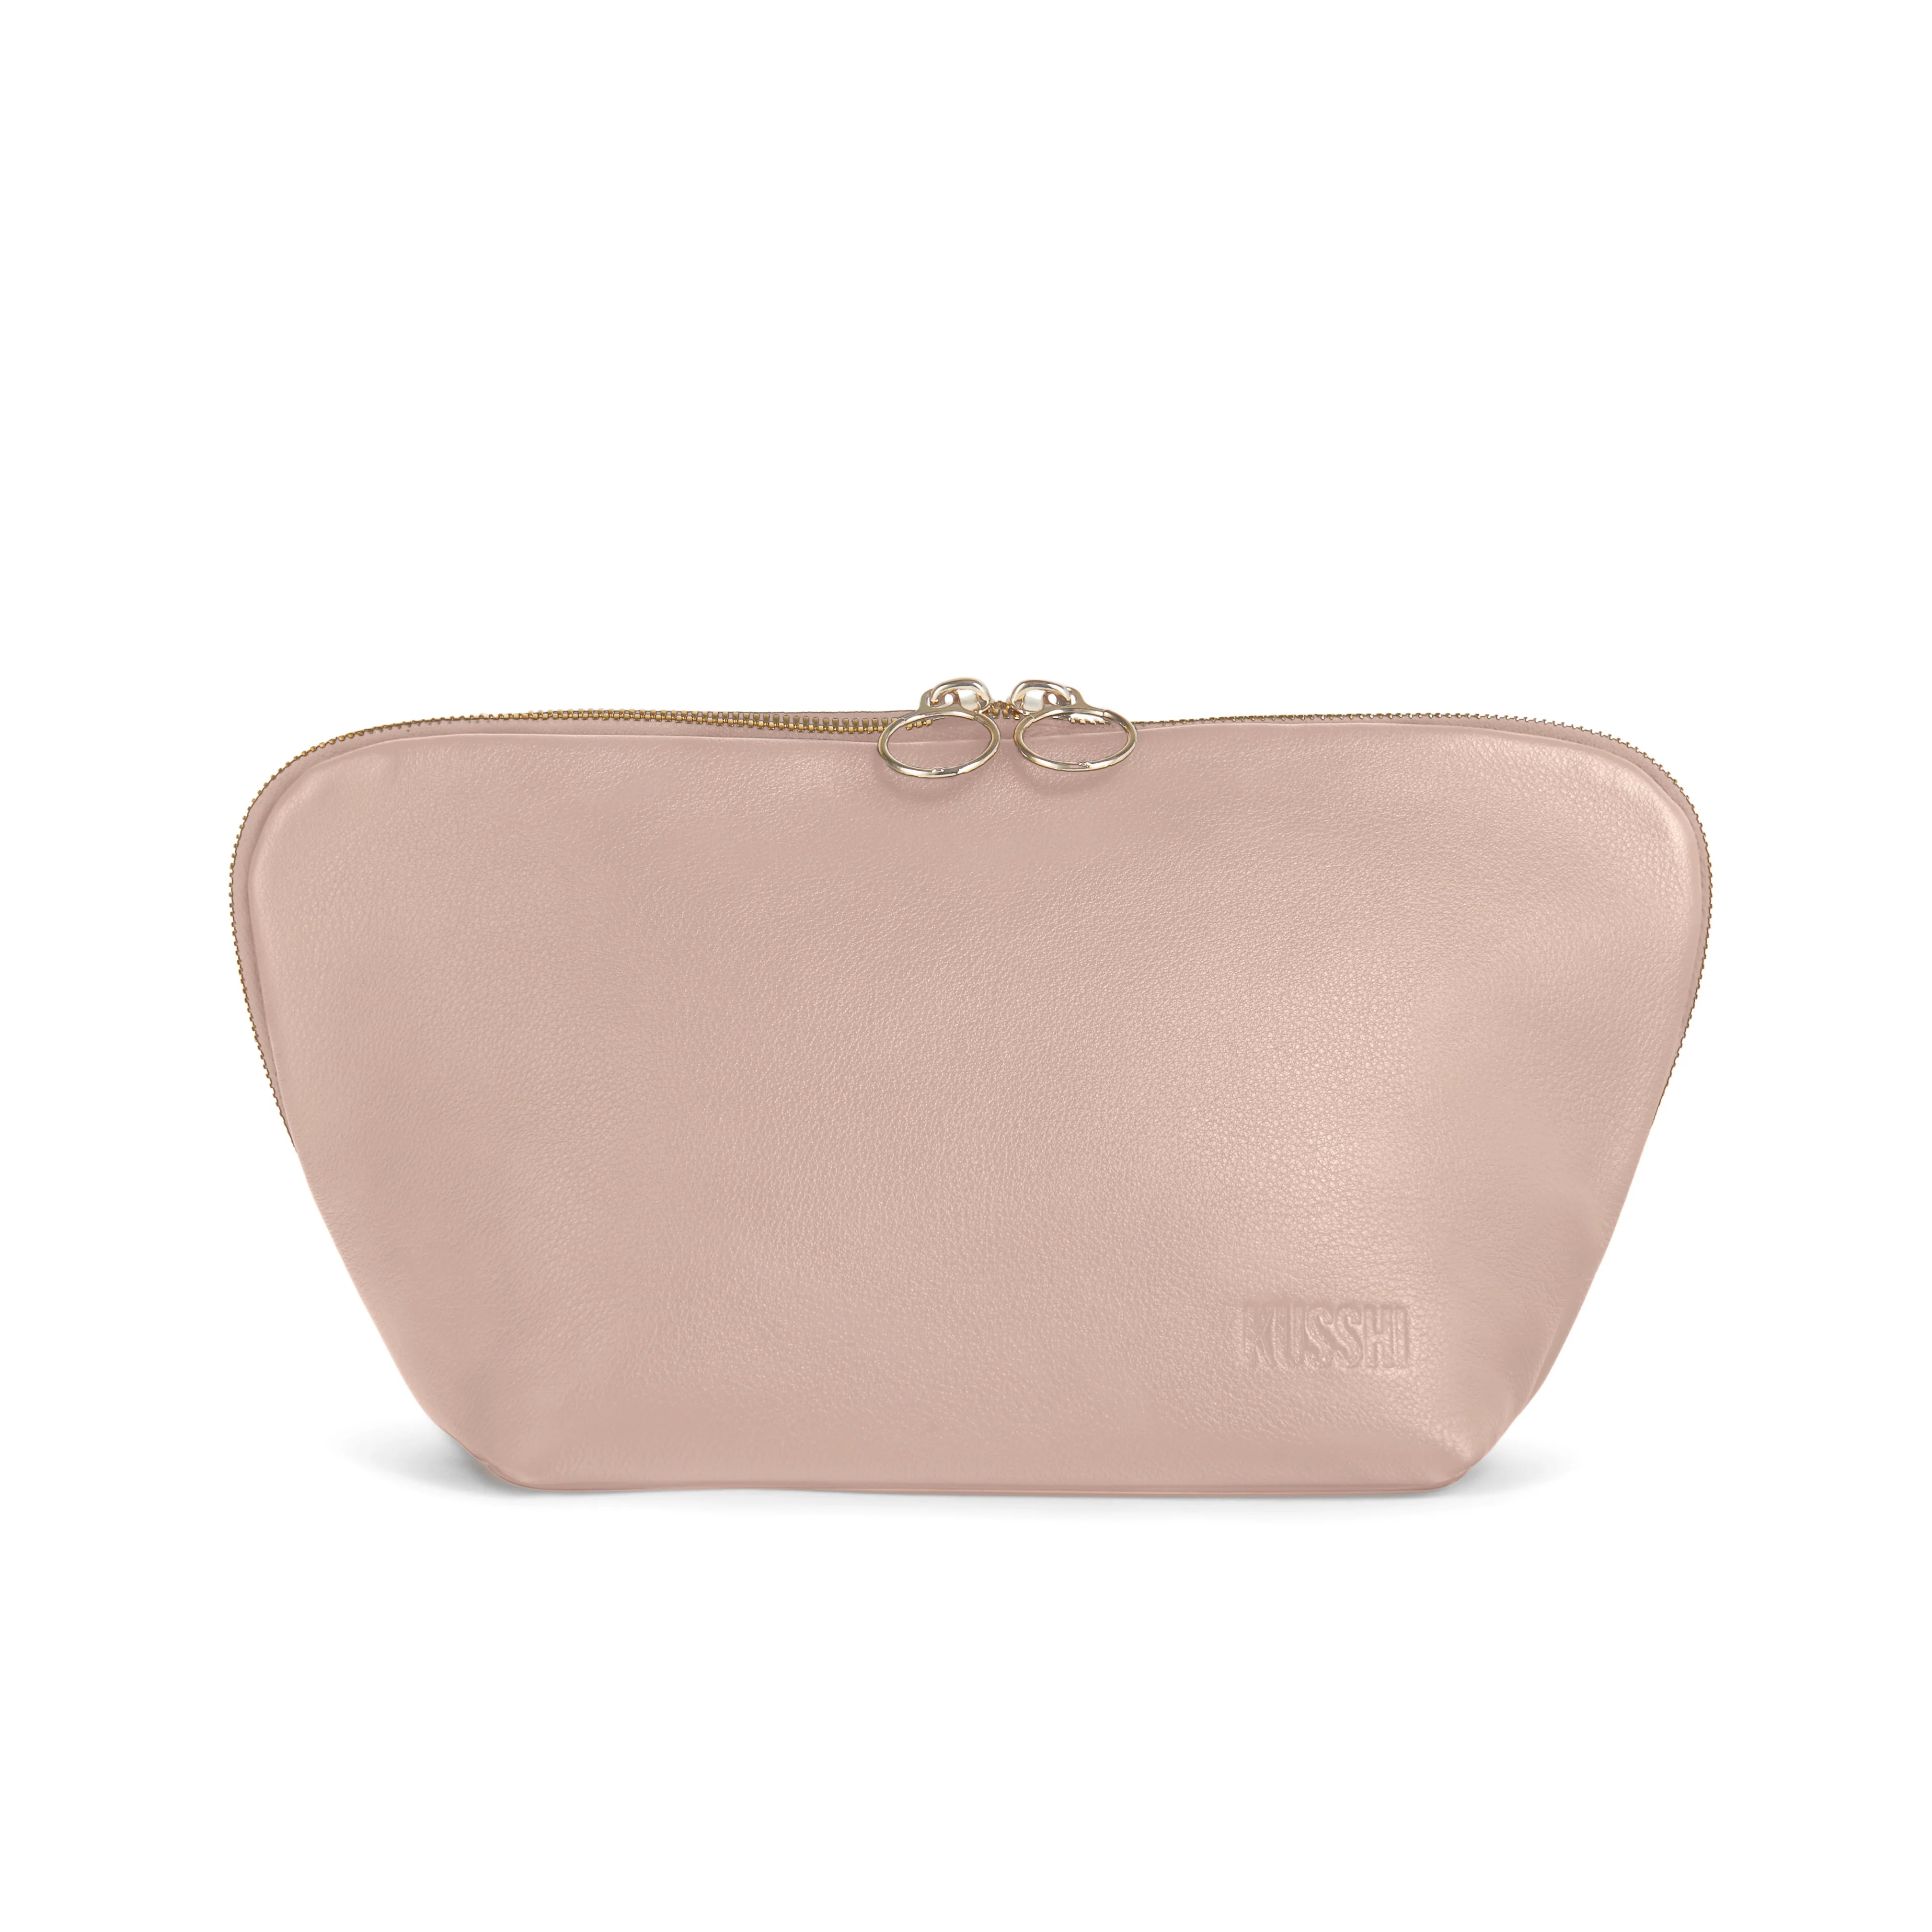 KUSSHI Signature Makeup Bag Blush Pink Leather with Cool Grey Interior